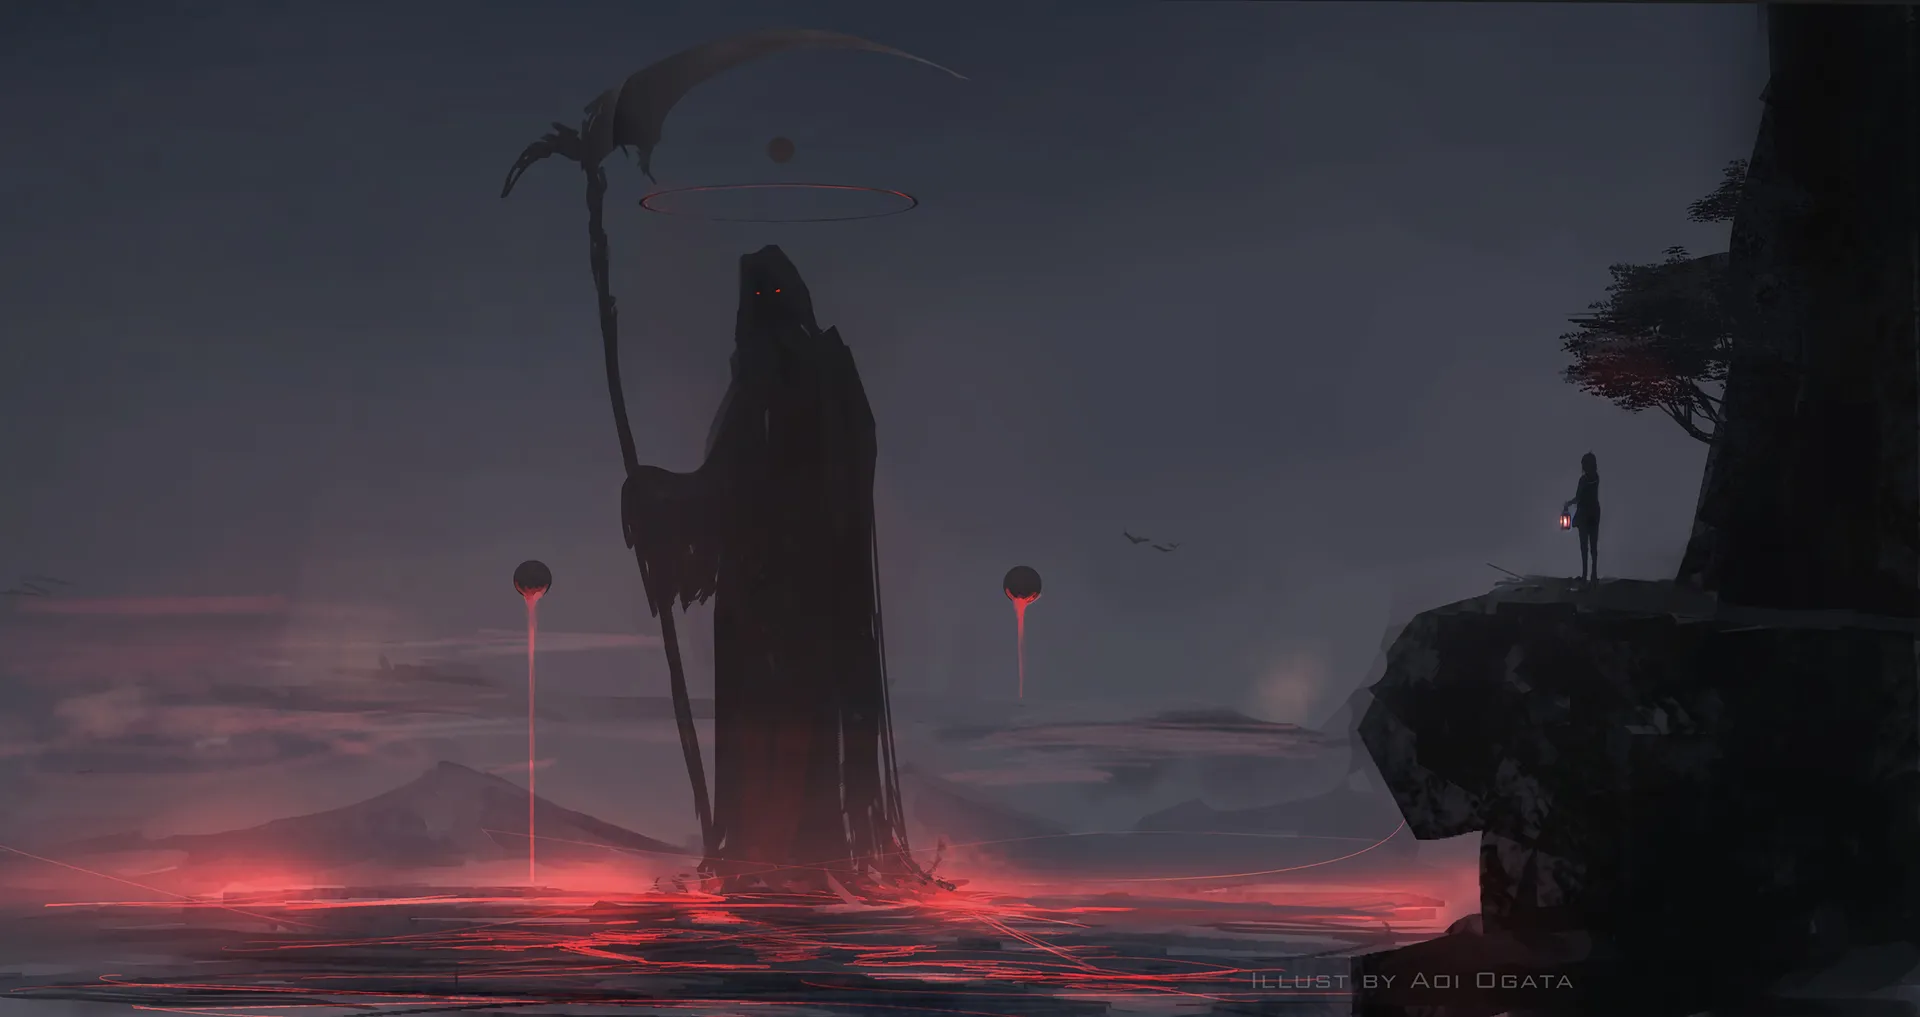 Grim Reaper Backgrounds